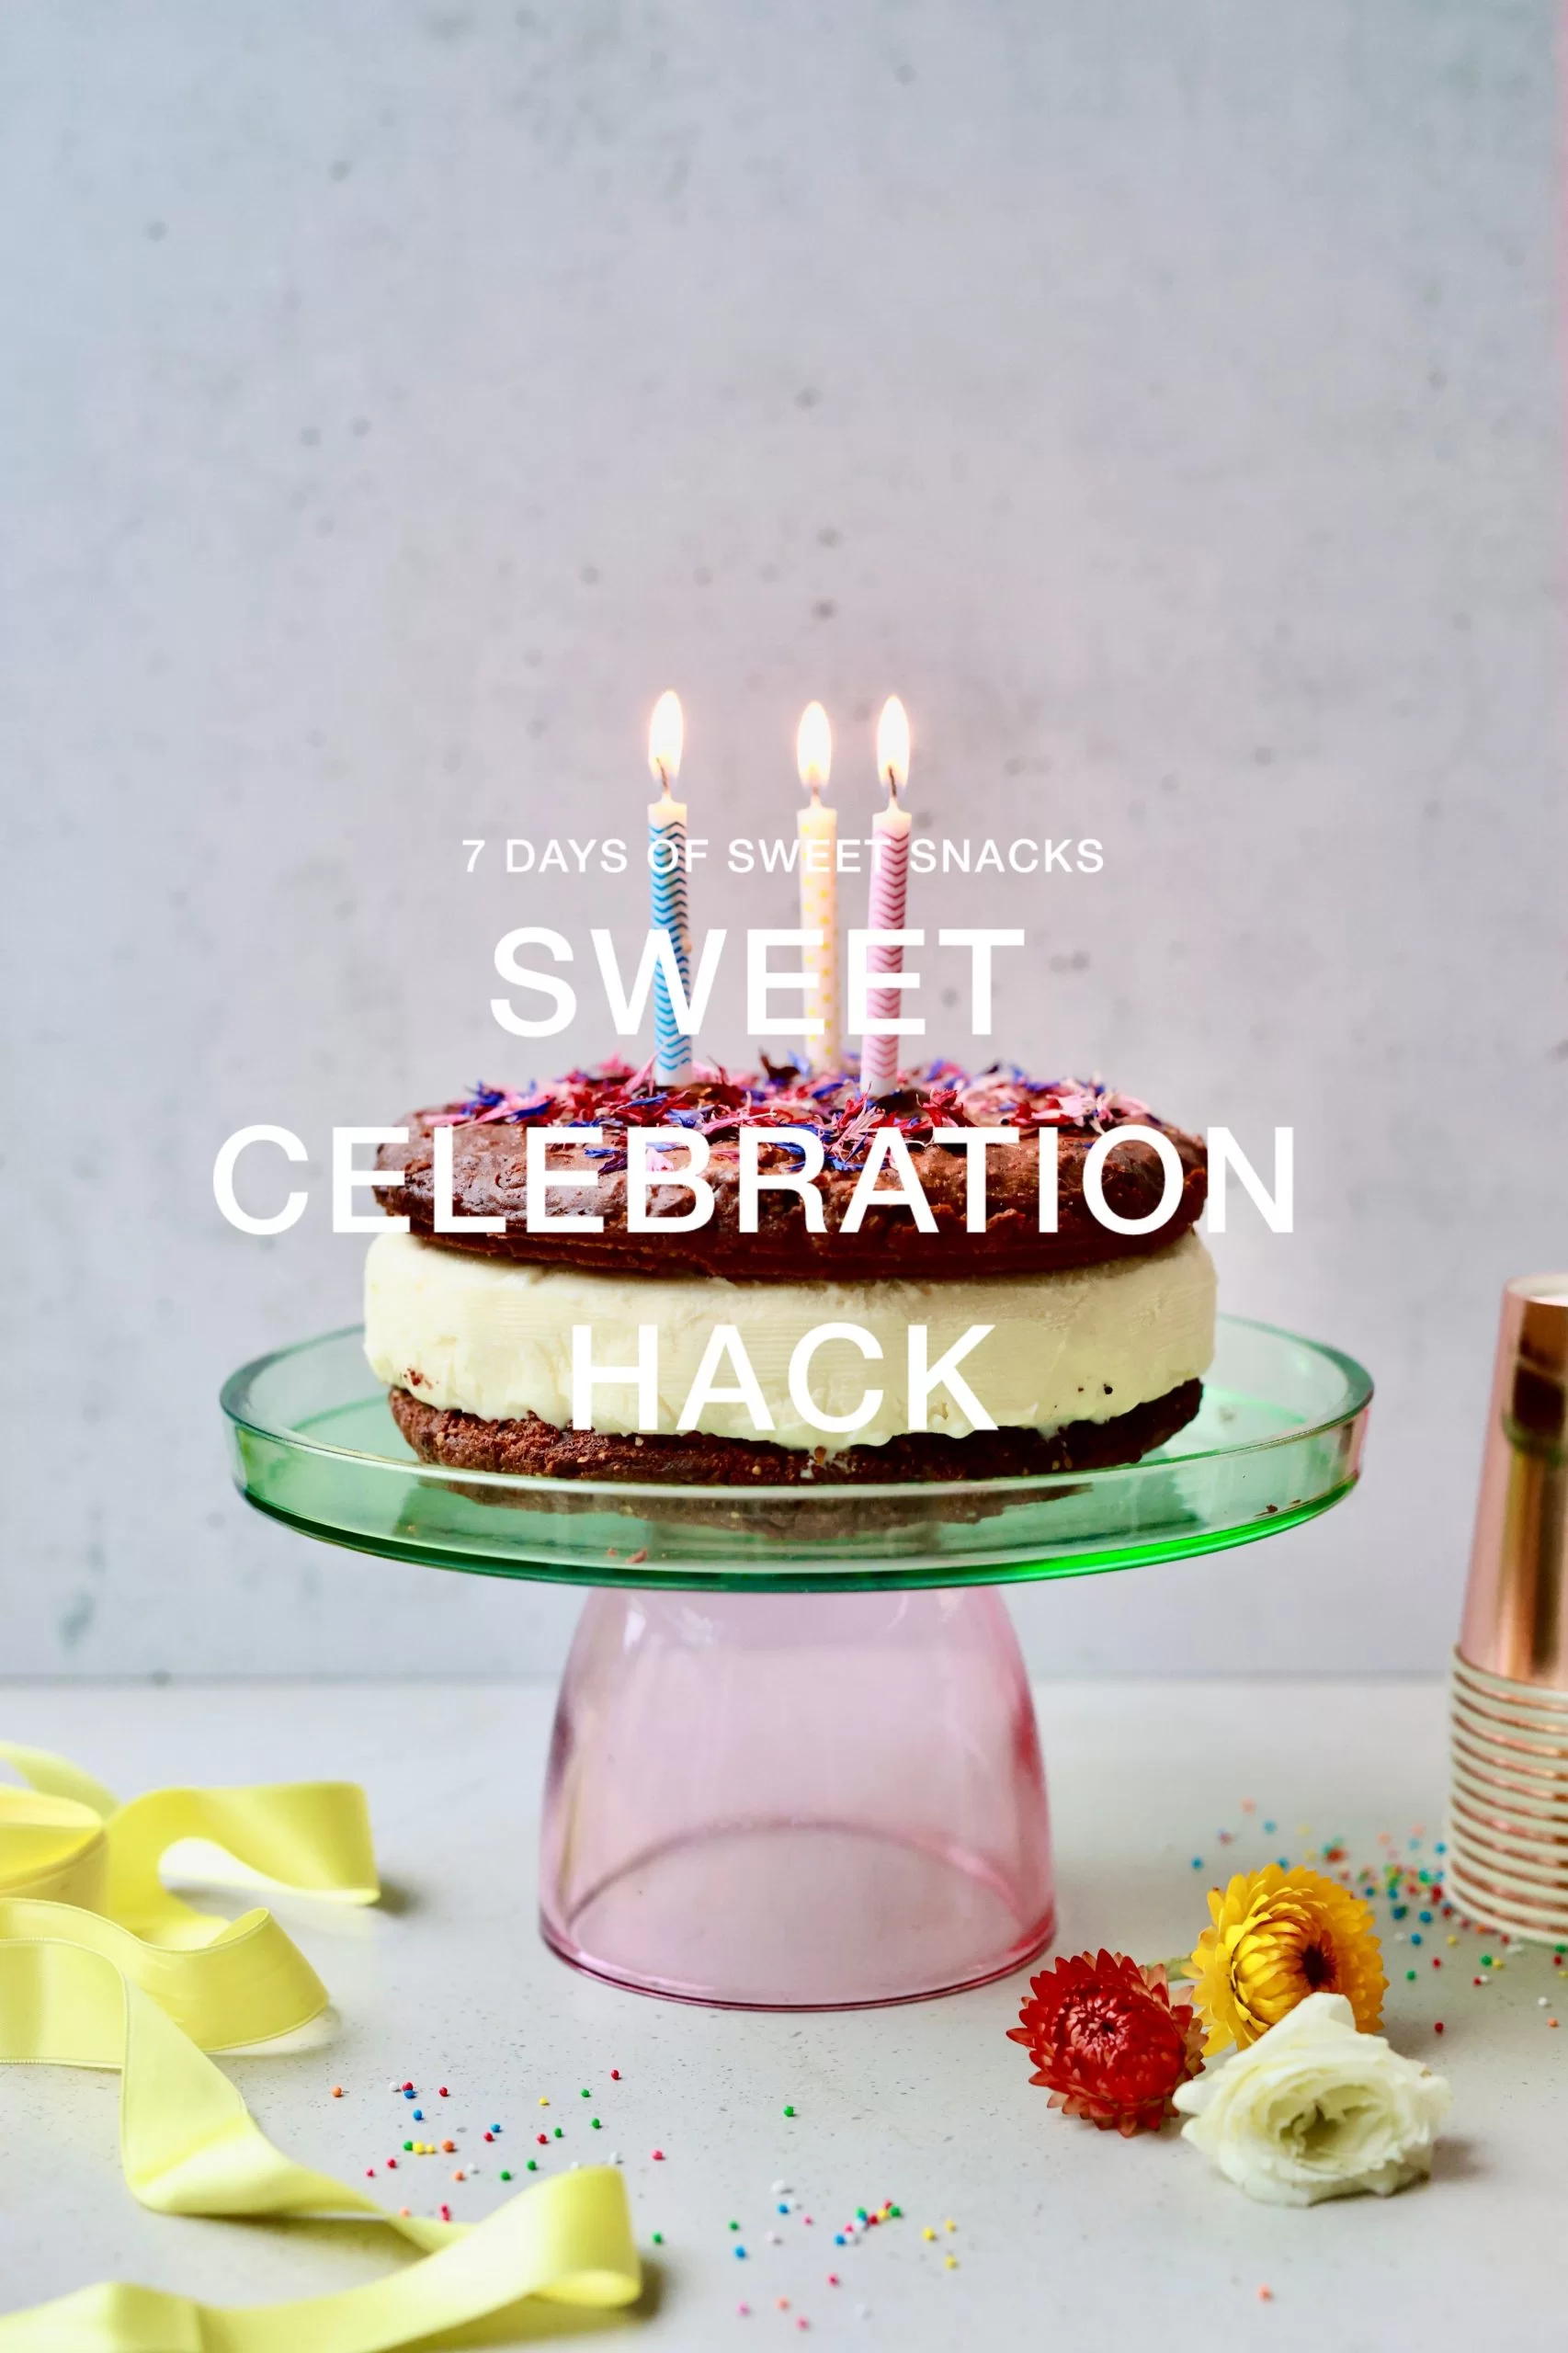 Ep 3 SWEET SNACK CELBRATION HACK, 7 days of Sweet Snacks